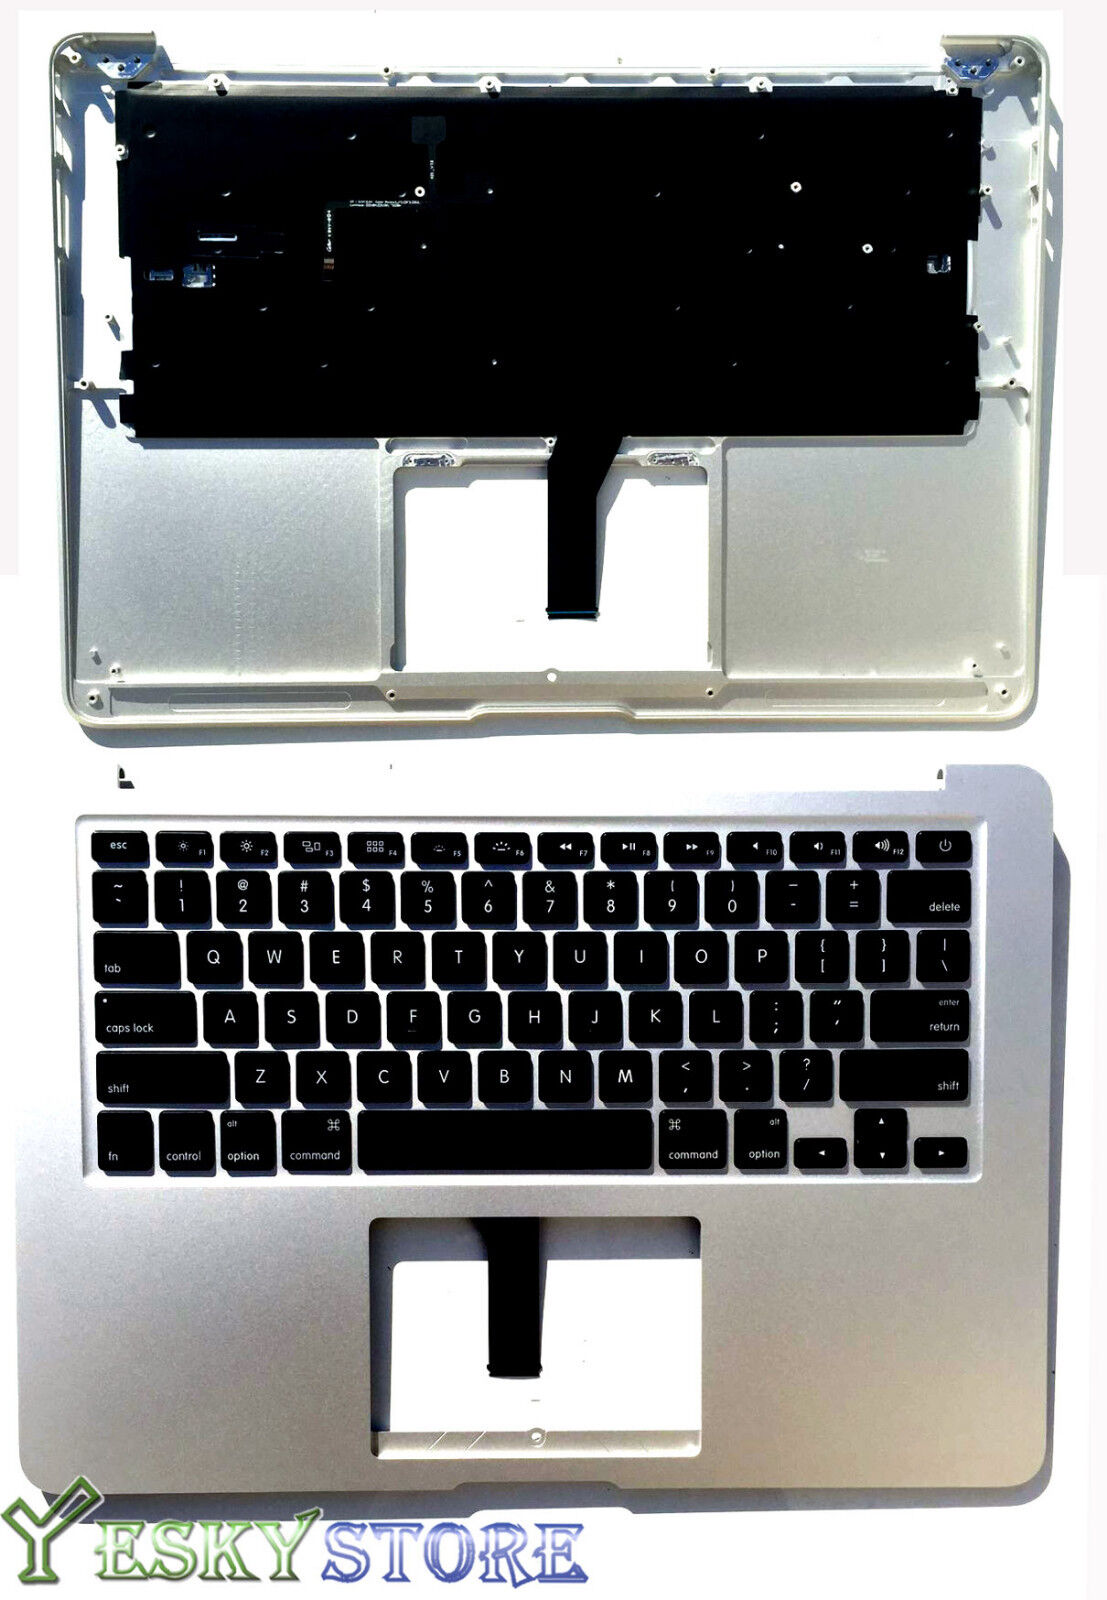 NEW Top Case Topcase Palmrest US Keyboard MacBook Air 13